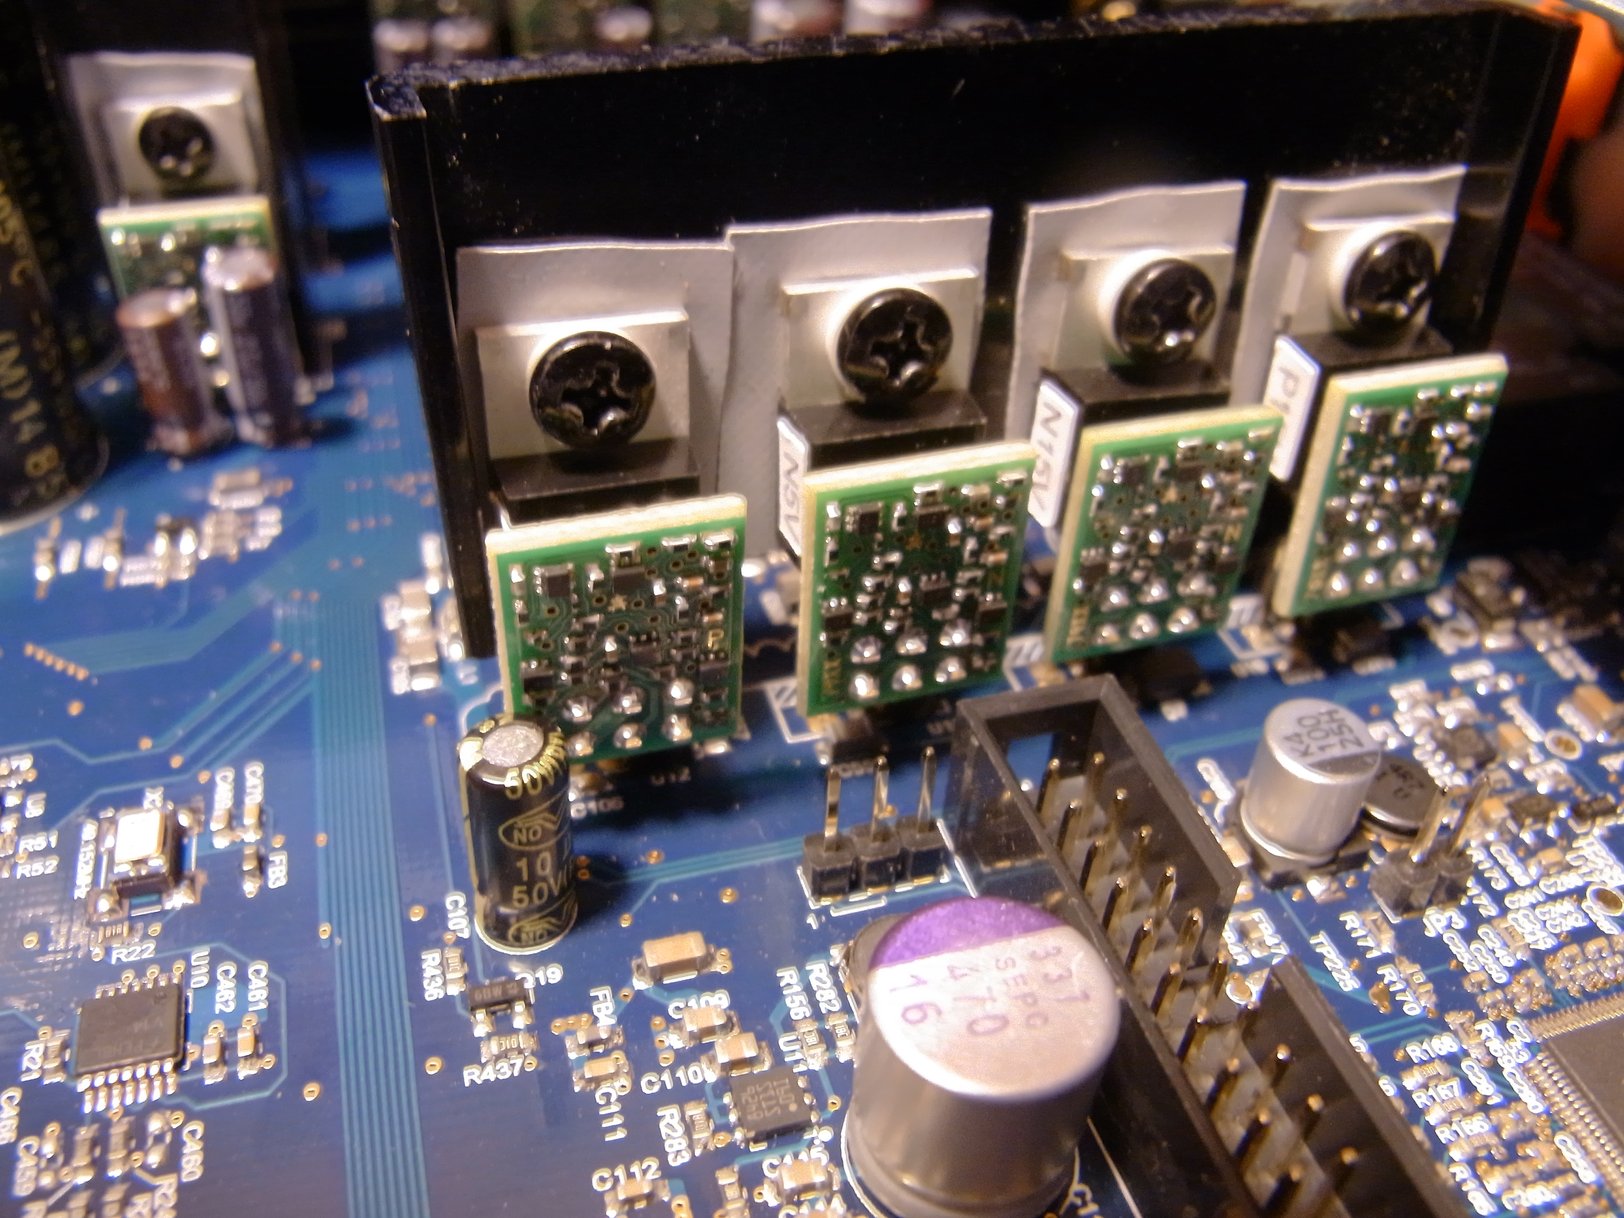 Cambridge Audio Azur upgraded with sparkos labs discretes